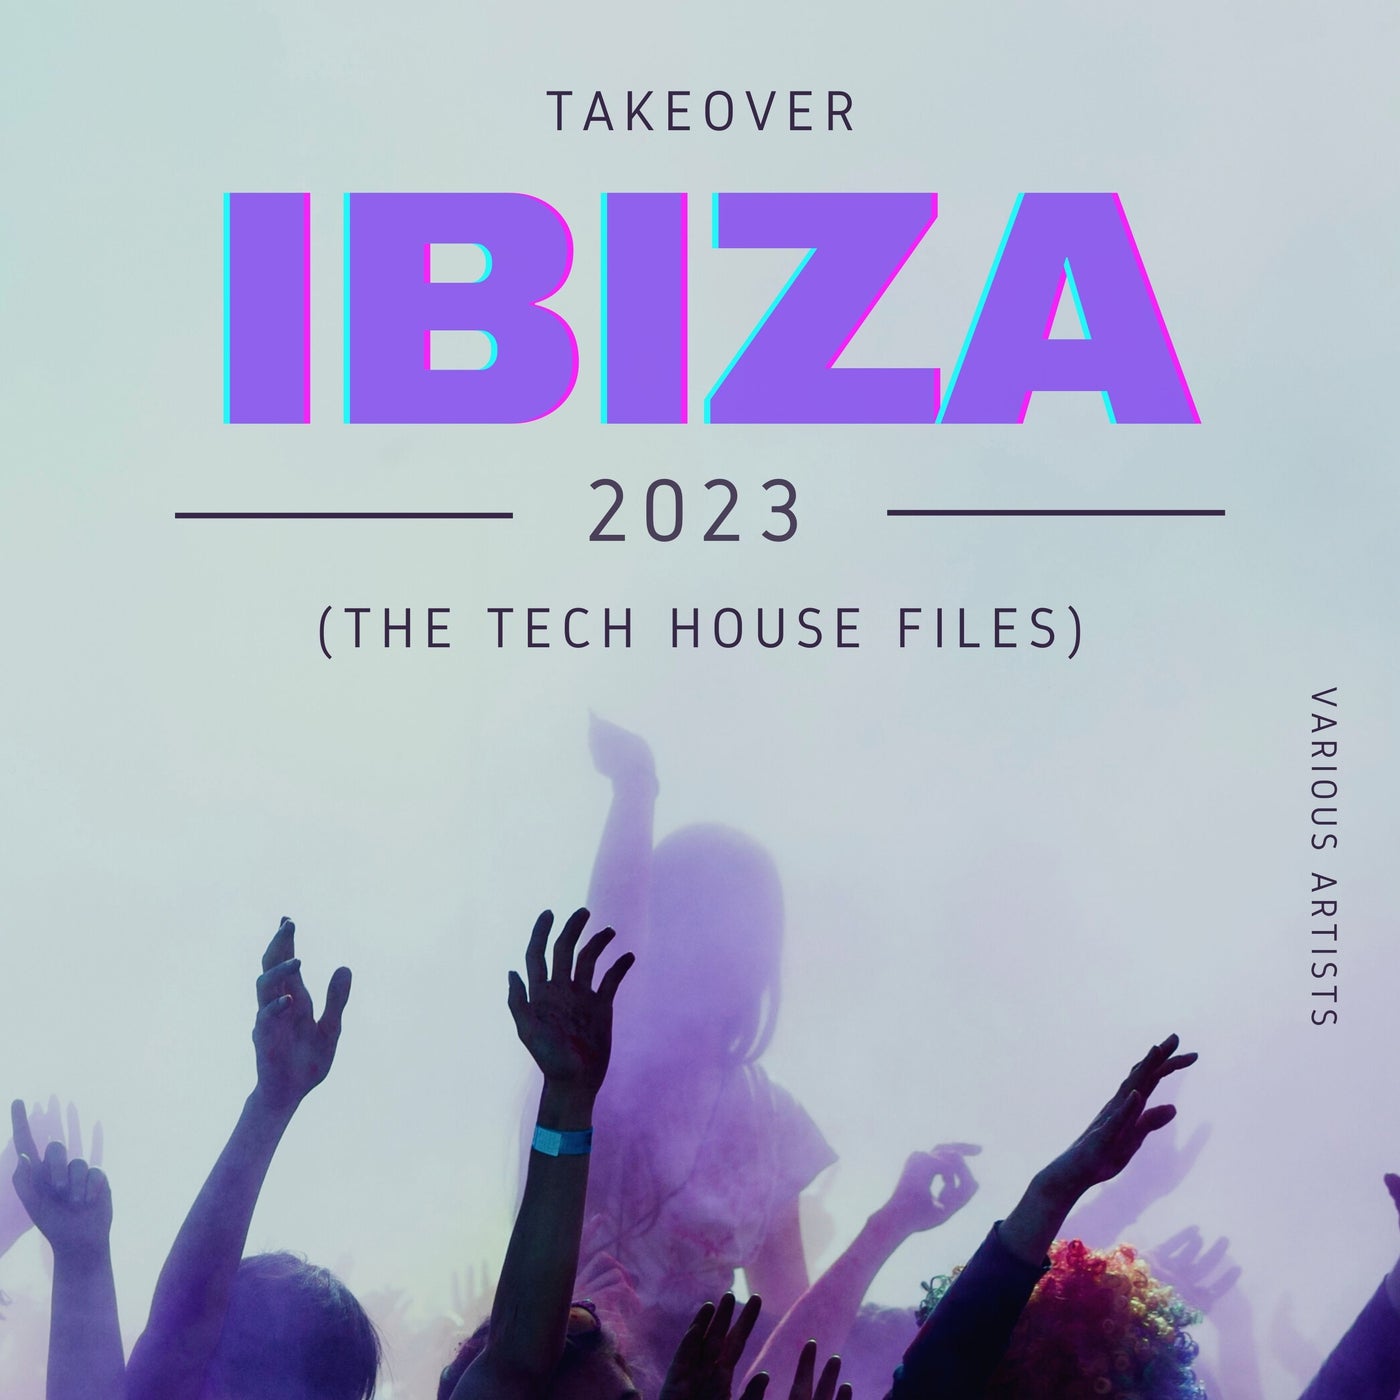 Takeover IBIZA 2023 (The Tech House Files)